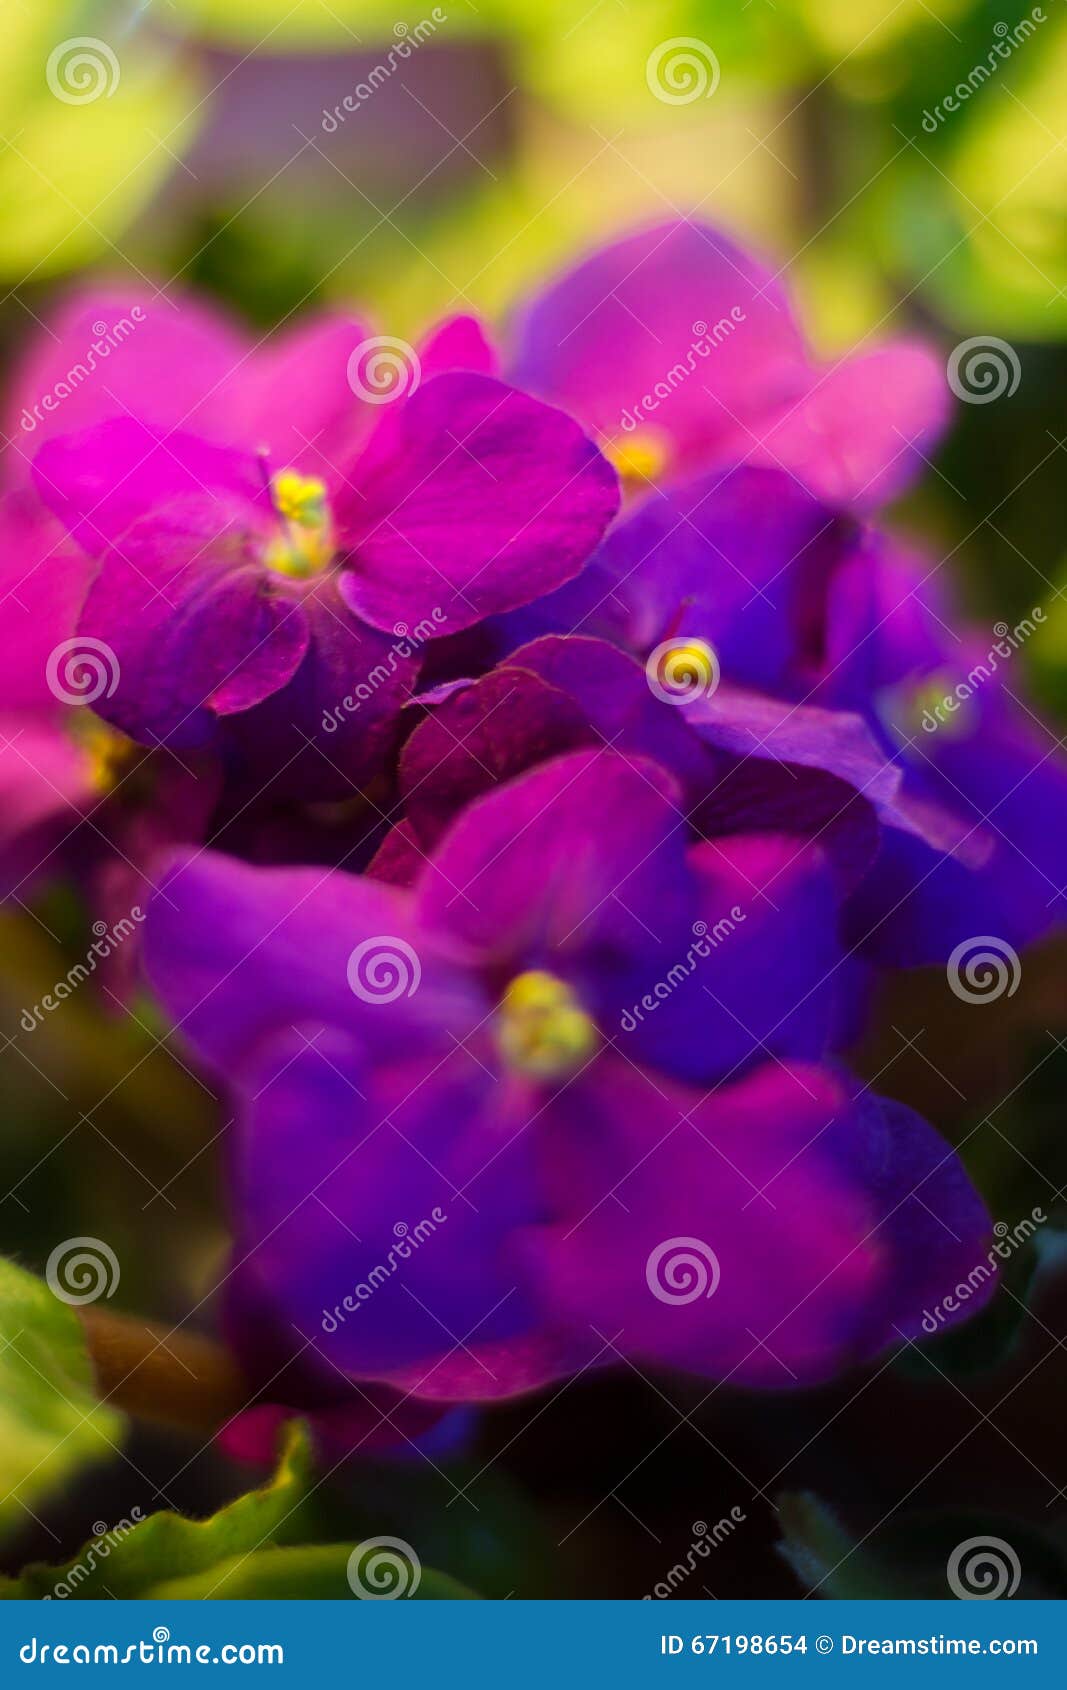 violet, flower, flowers, naturel, colors, amethyst, beautiful, shades of blue, plants, viola, leaves, bedding plants, ecology, orn